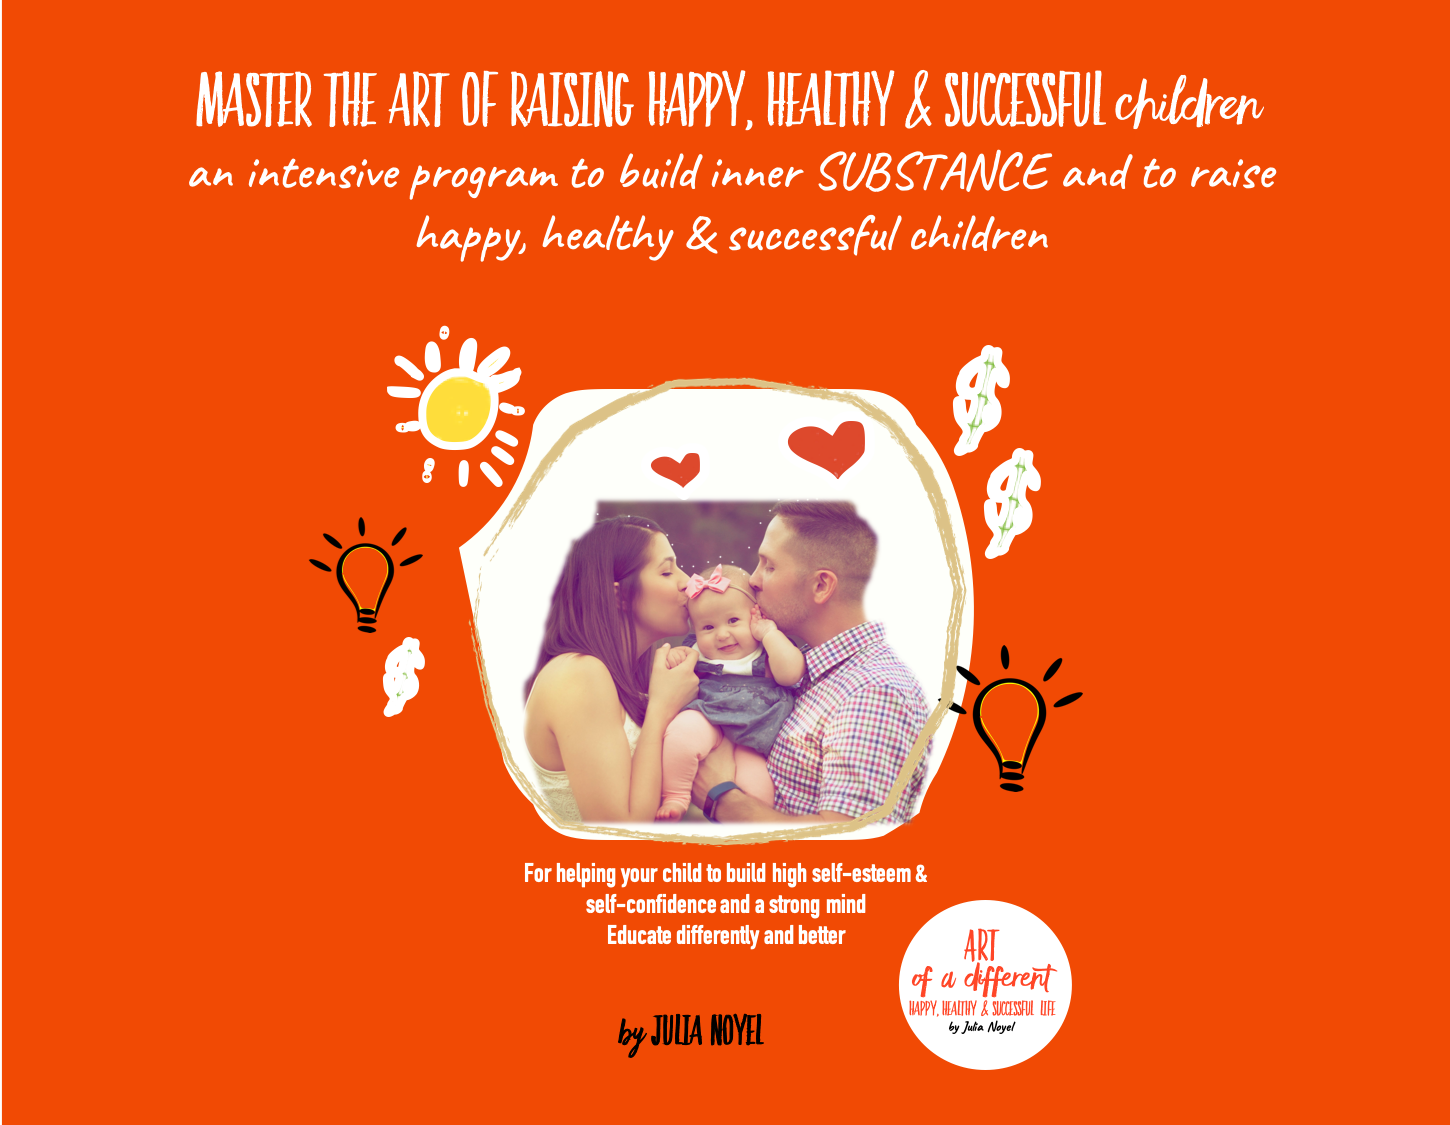 master the art of raising happy, healthy & successful children